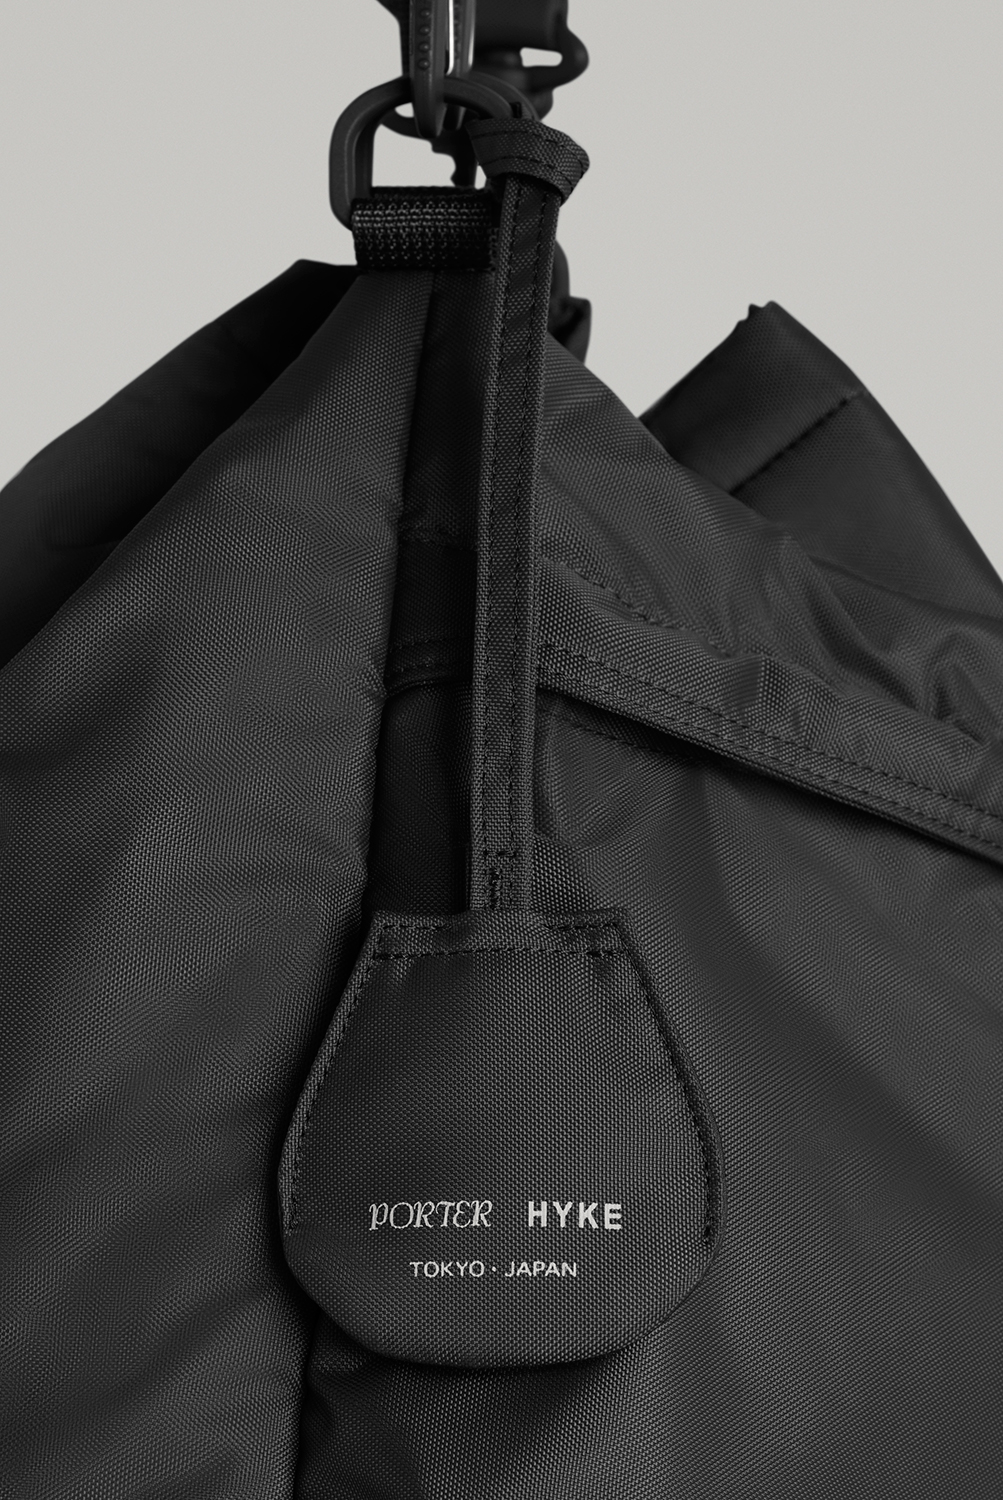 Hyke x Porter 2WAY TOOL BAG (small) cmd-couplings.com